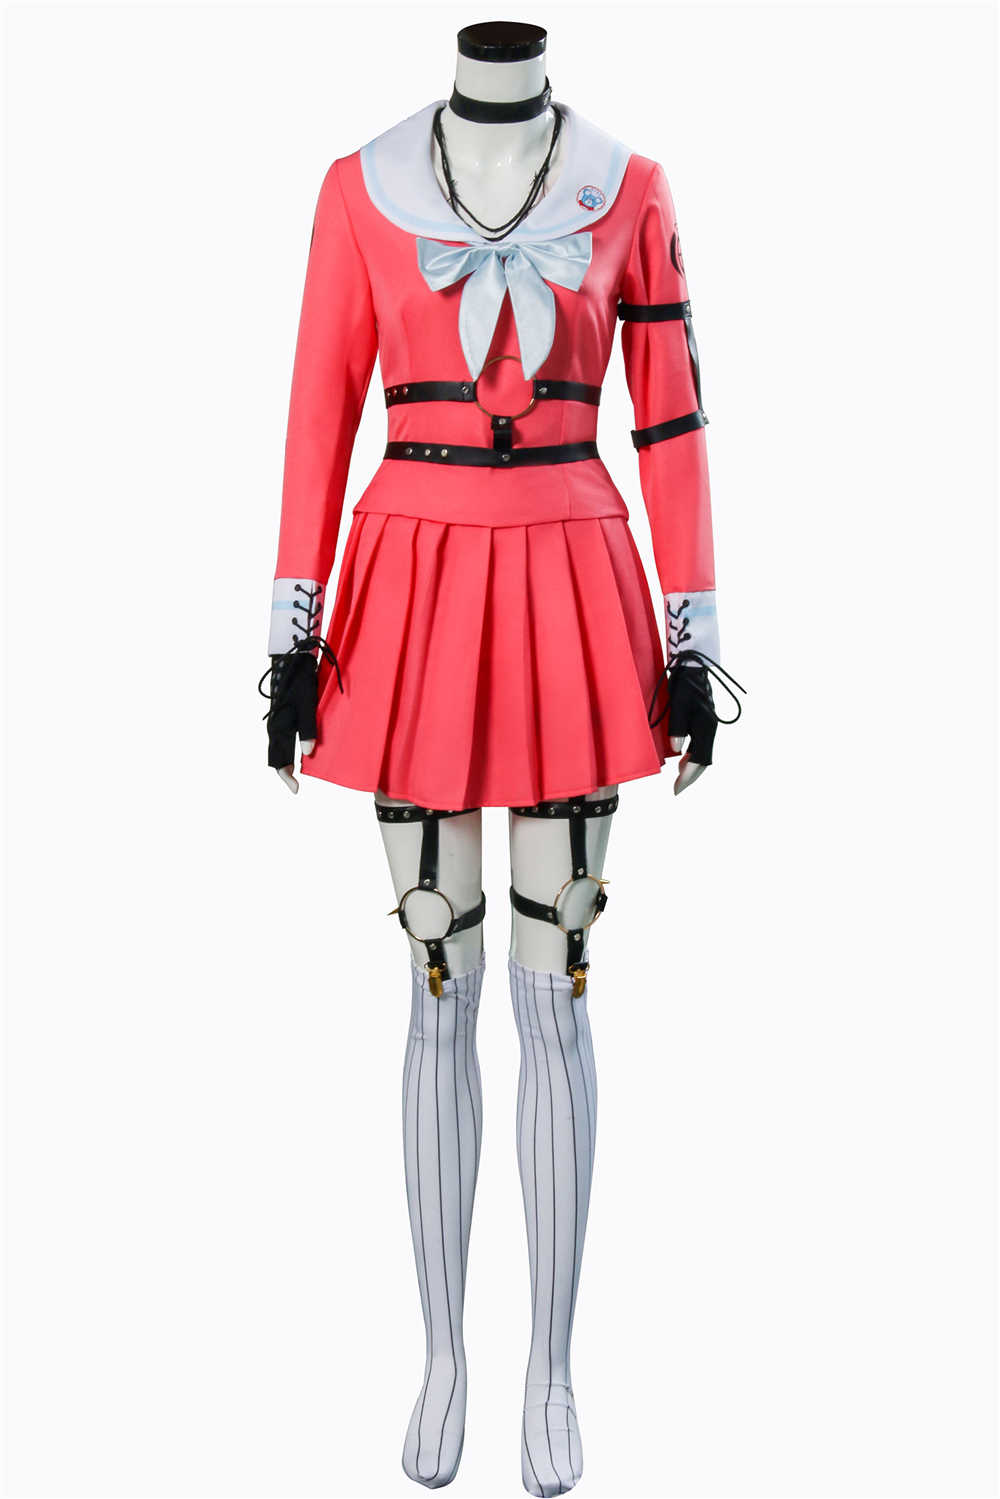 Anime Danganronpa Dangan Ronpa V3: Killing Harmony MIU Iruma High School Uniform Cosplay Costume-Takerlama 